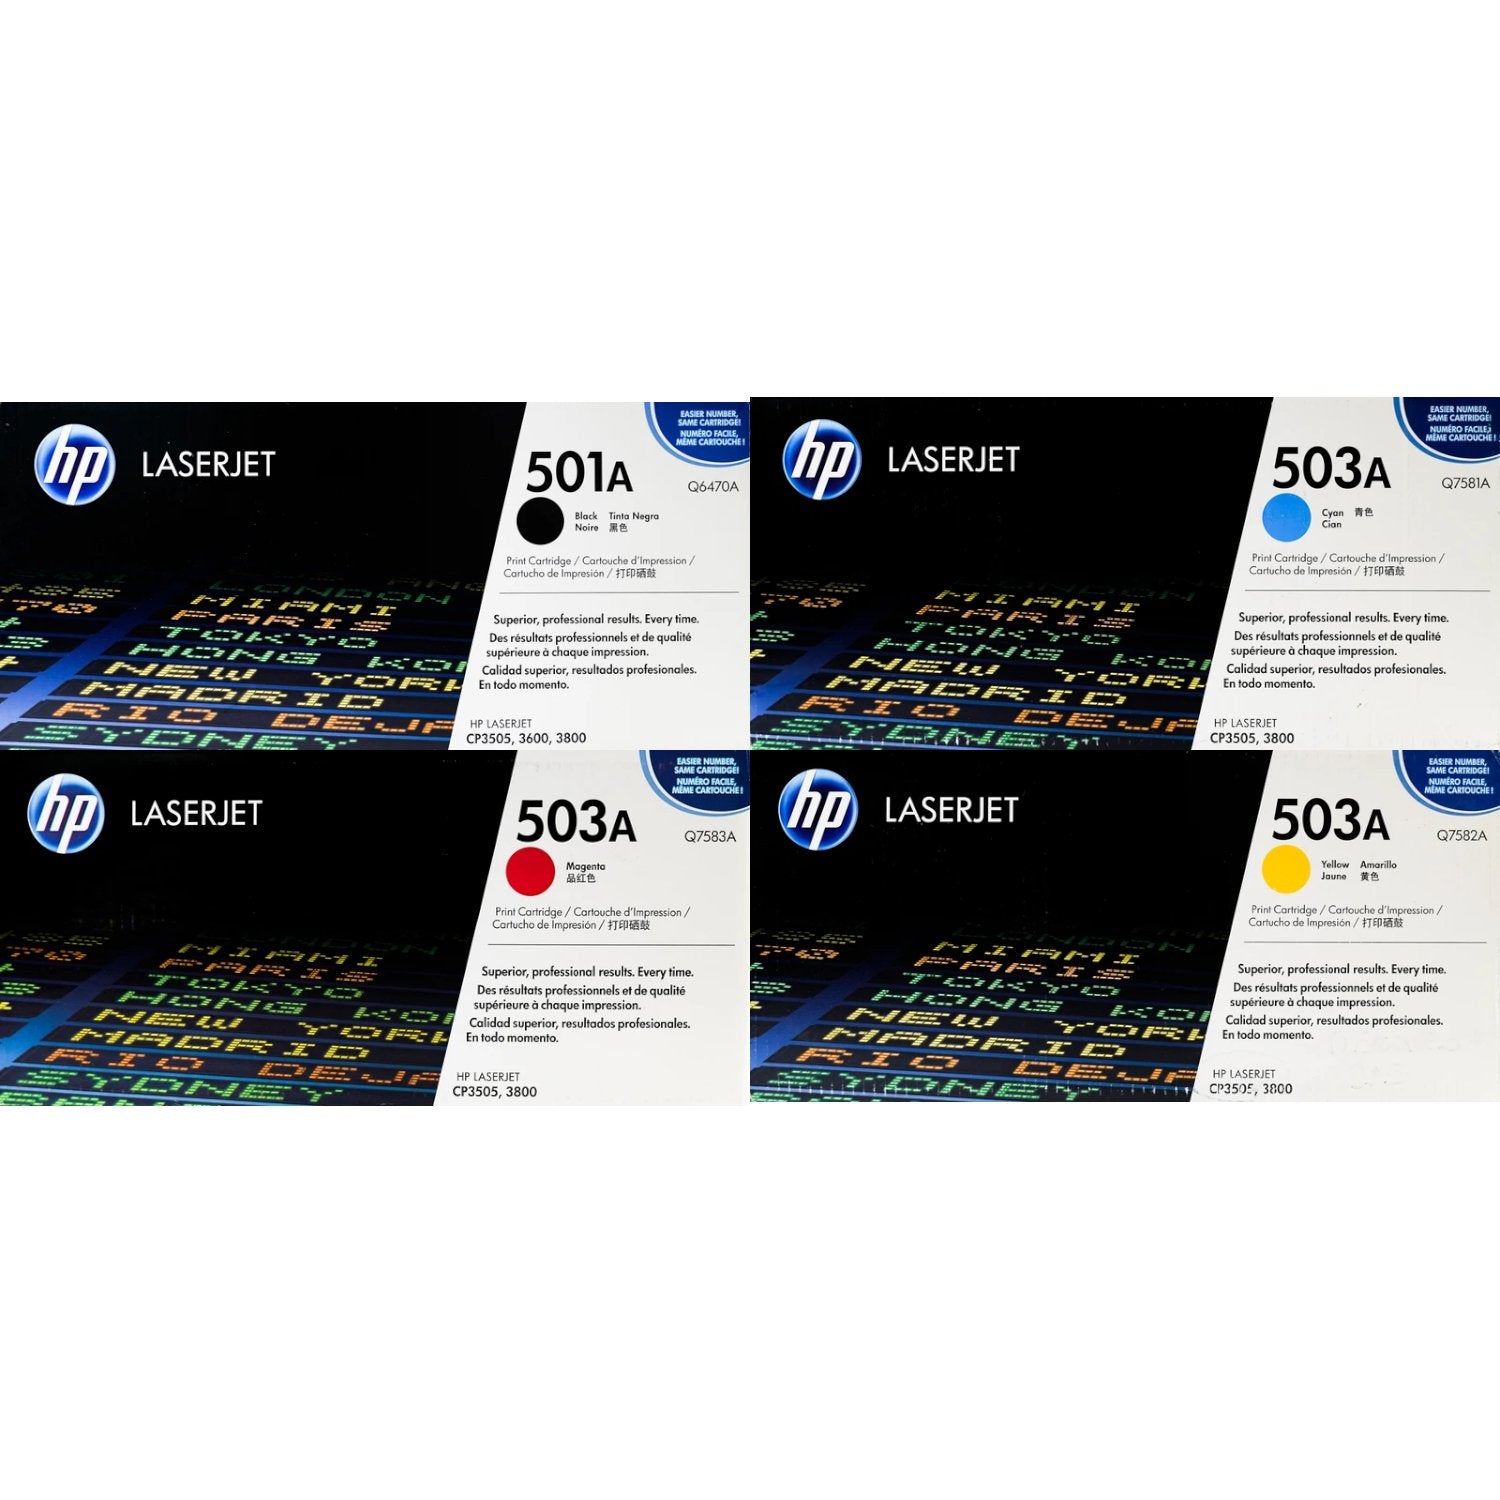 HP 501A / HP 503A Toner SET - Combo 4 Pack - Q6470A Q7581A Q7582A Q7583A - Black Cyan Magenta Yellow - Original HP LaserJet Toner Cartridges